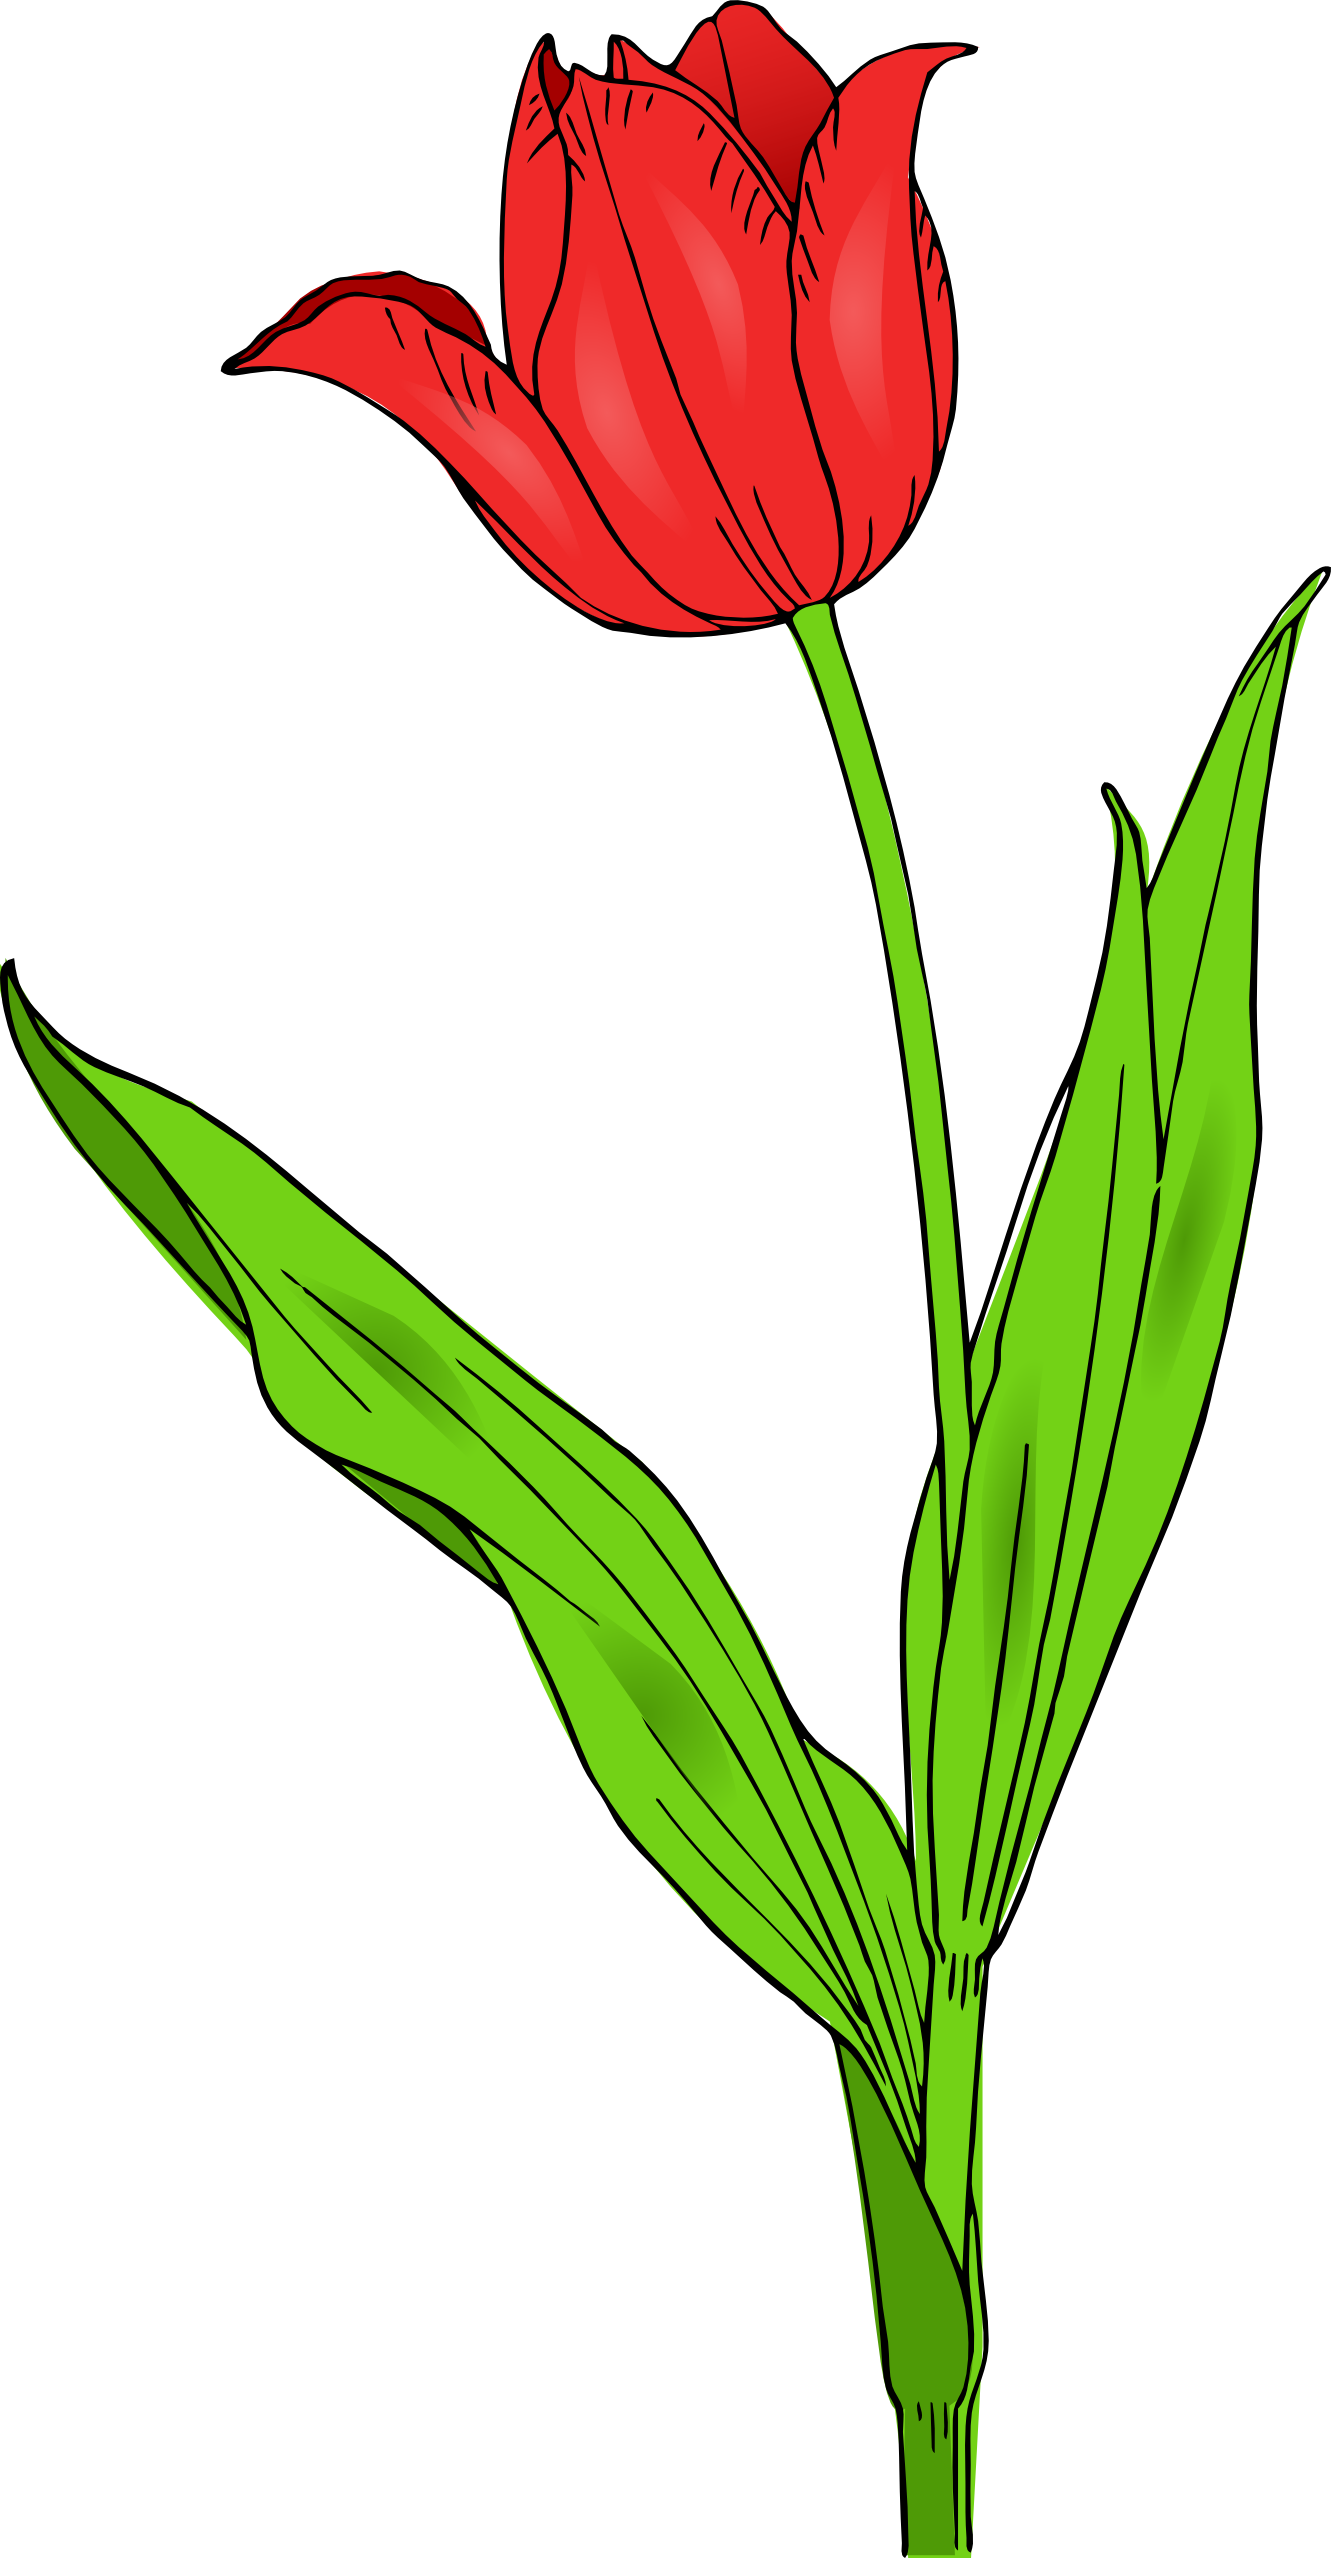 Colored Tulip xochi.info scallywag Flower Plant xochi.